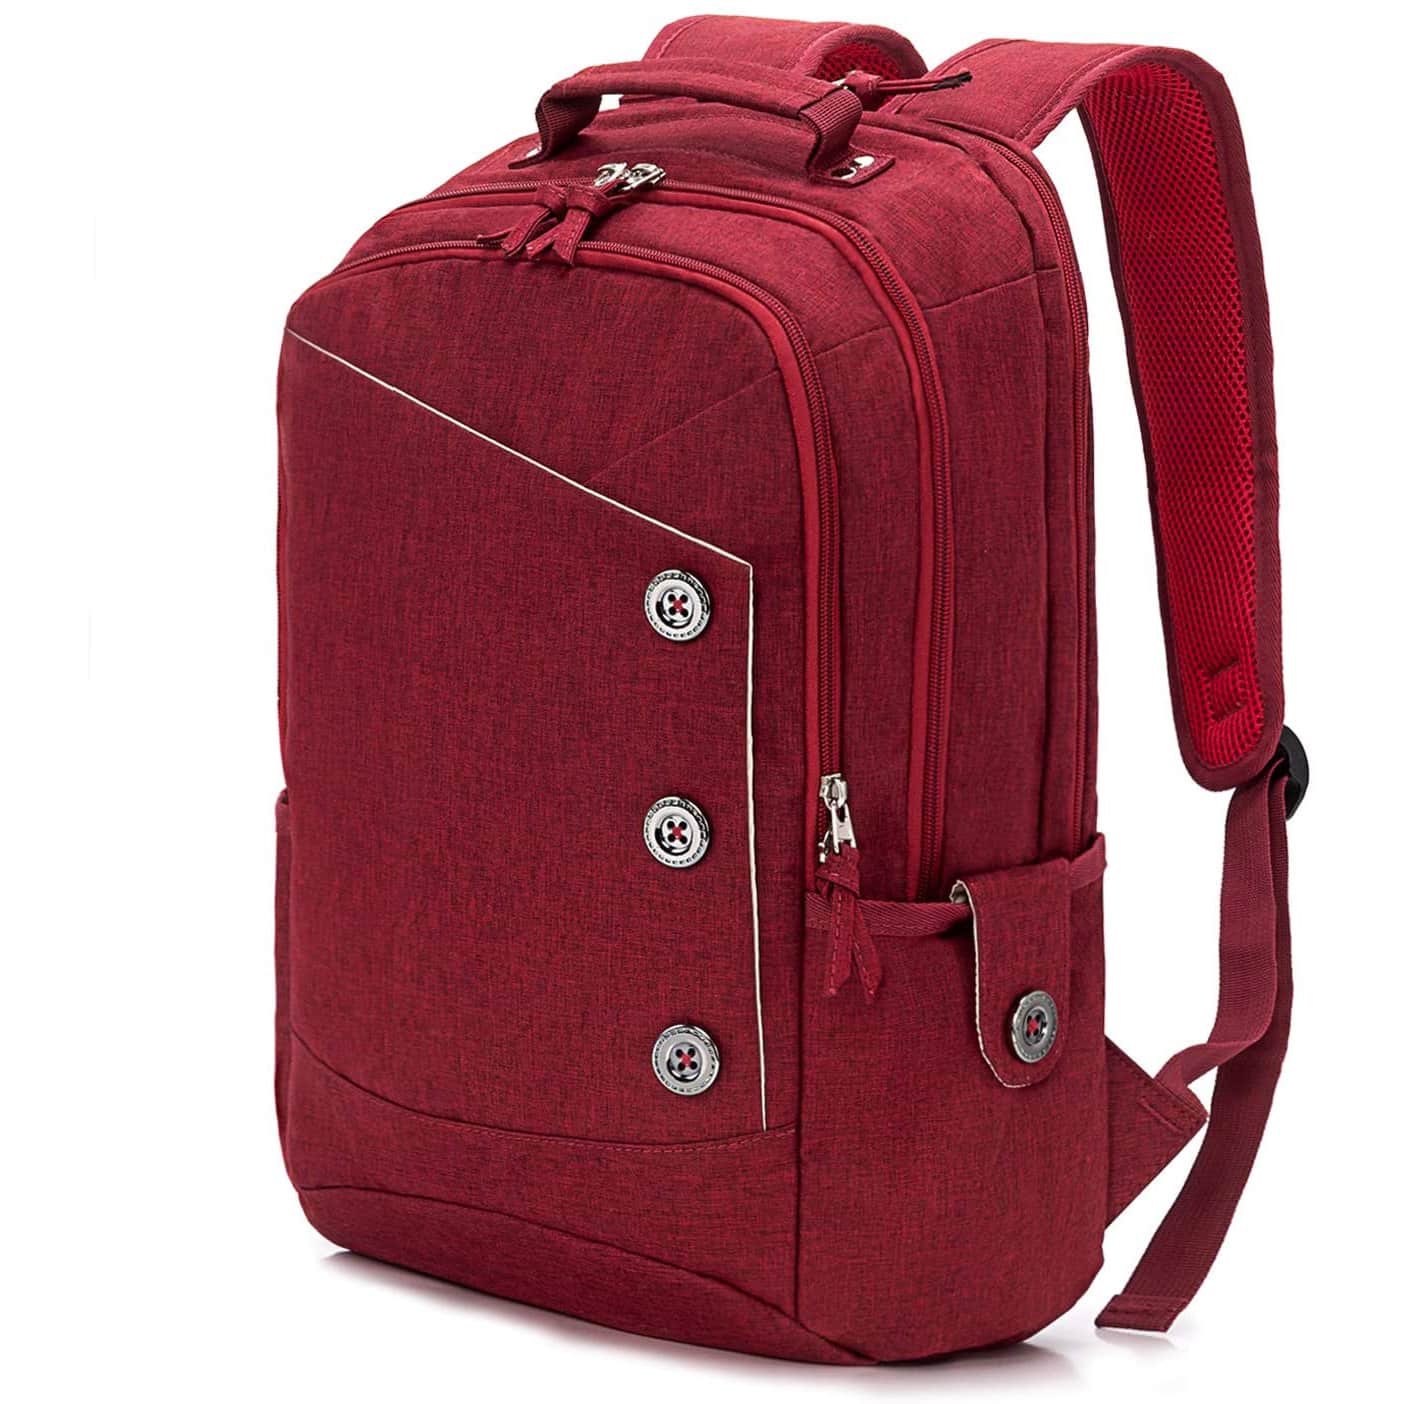 4.KINGSLONG Laptop Backpack For Women 15.6 Inch For Travel Work Waterproof Red 